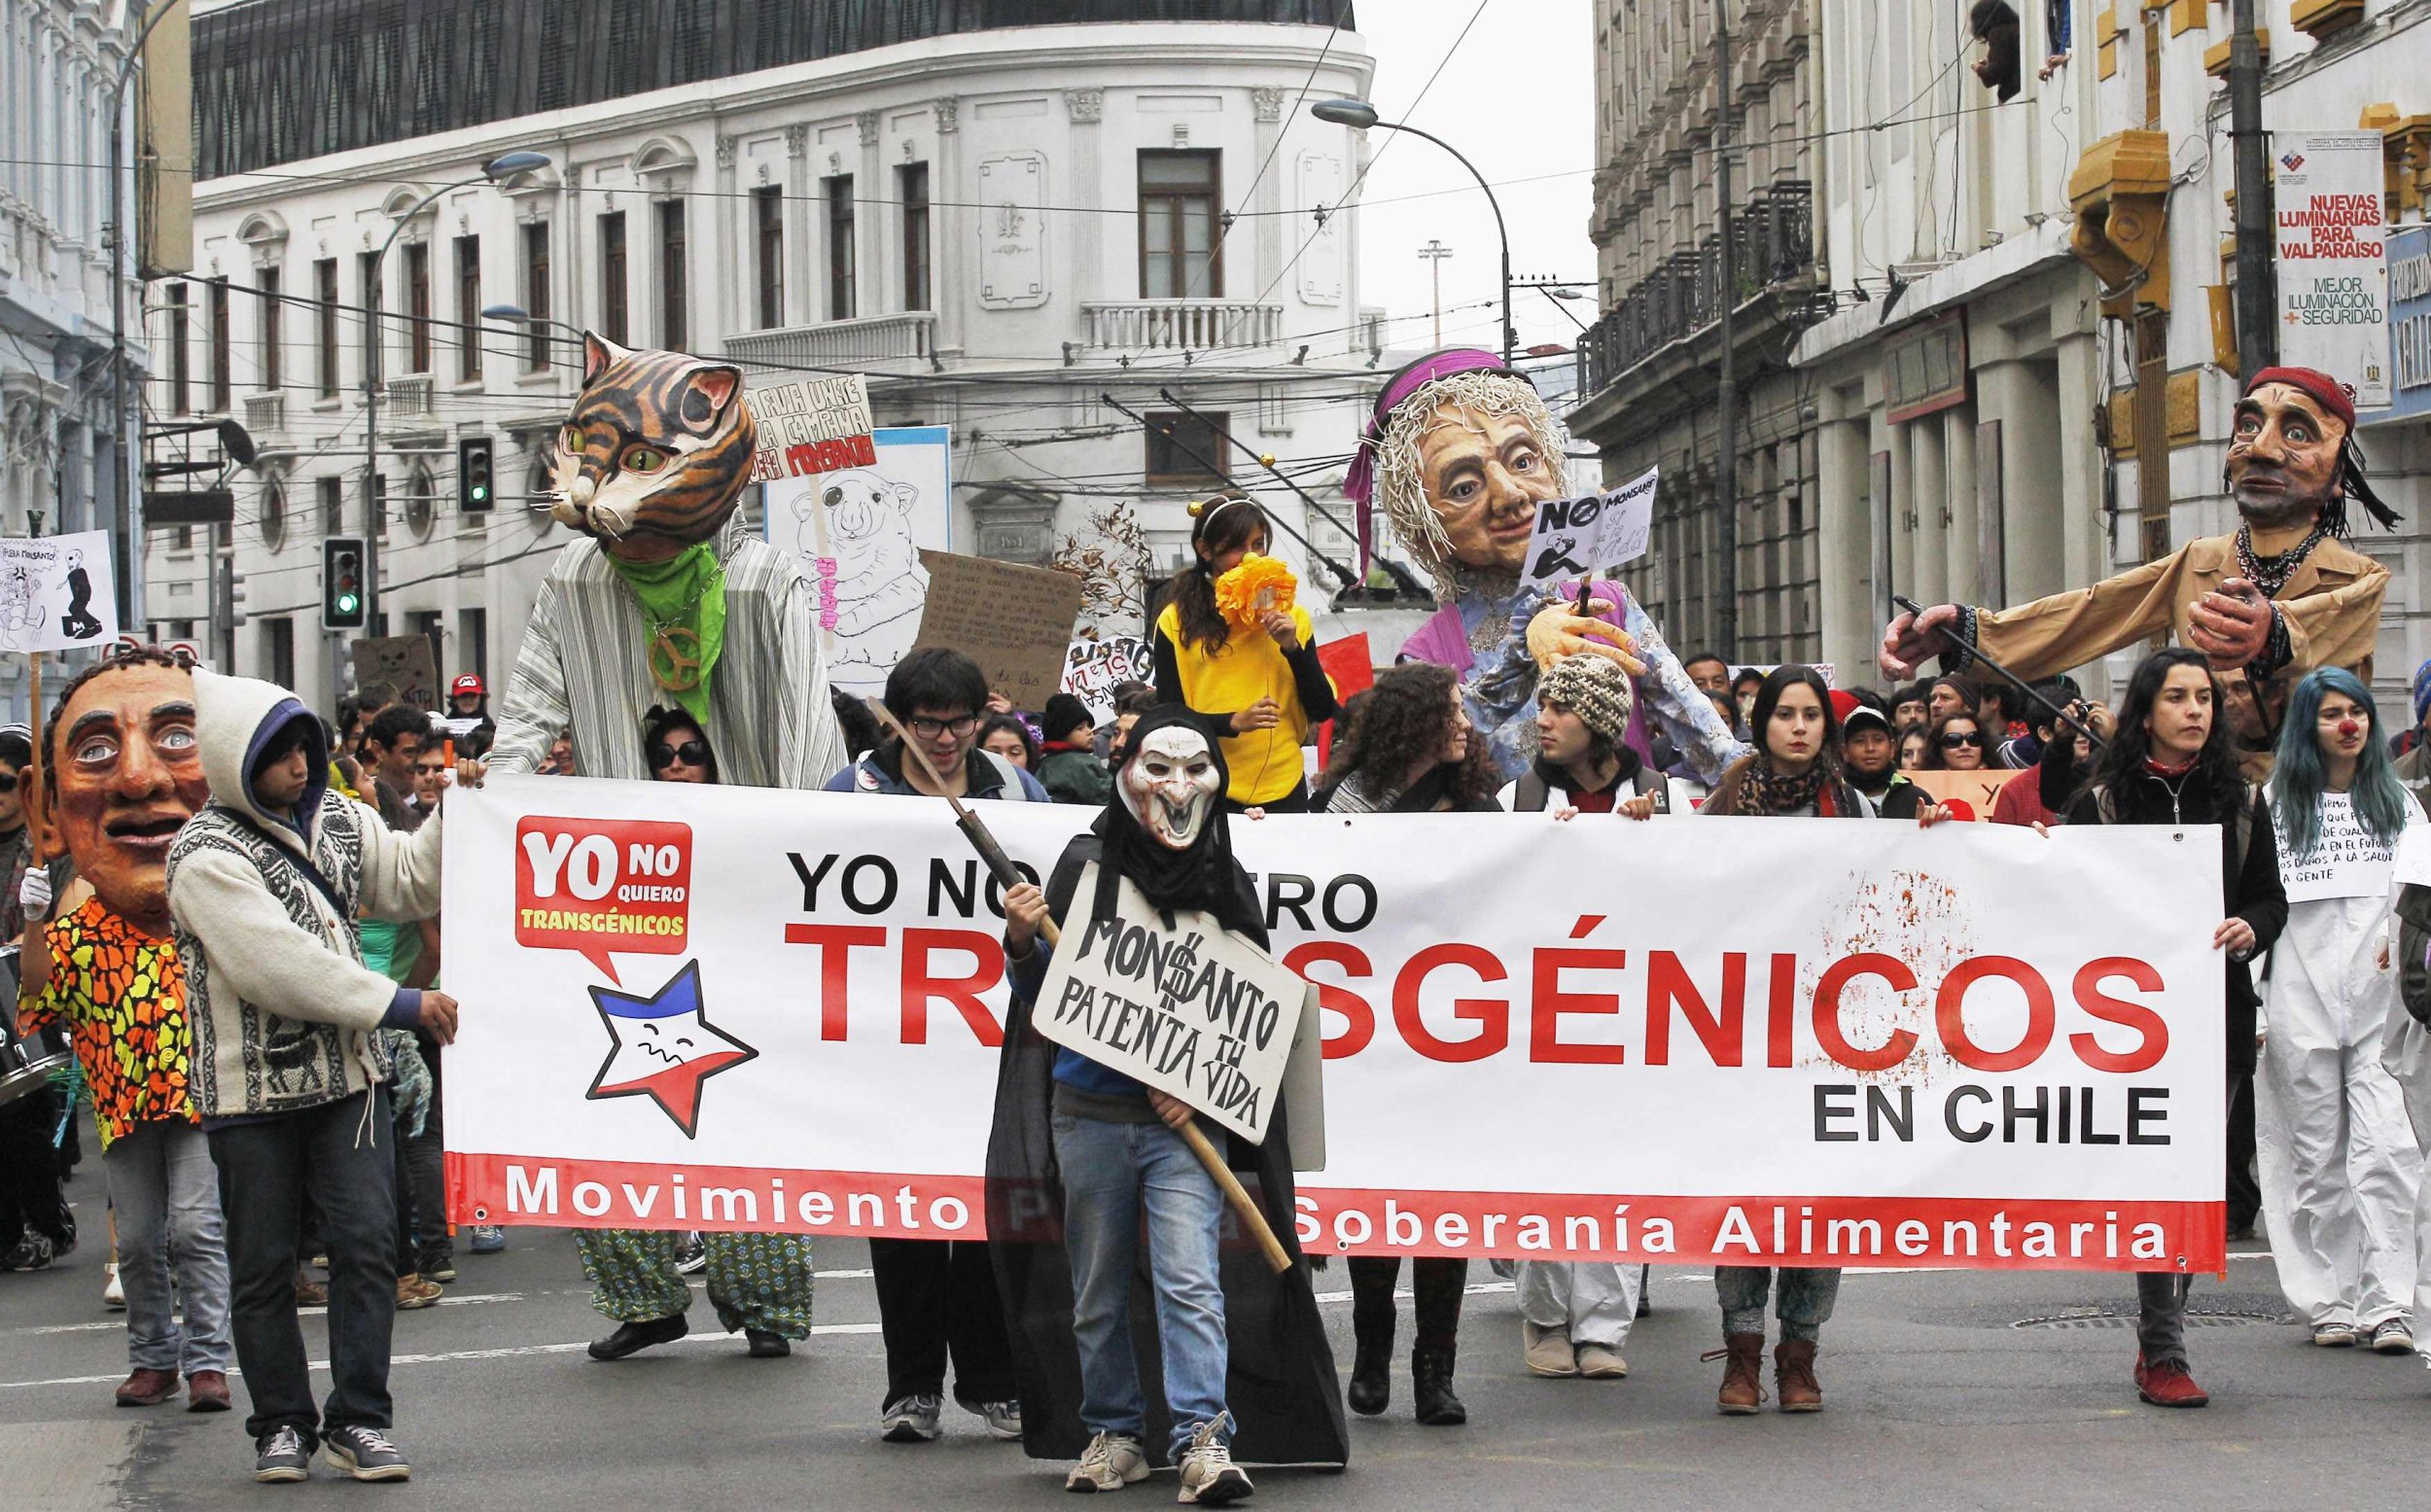 March Against Monsanto-Valparaiso, Chile-1A